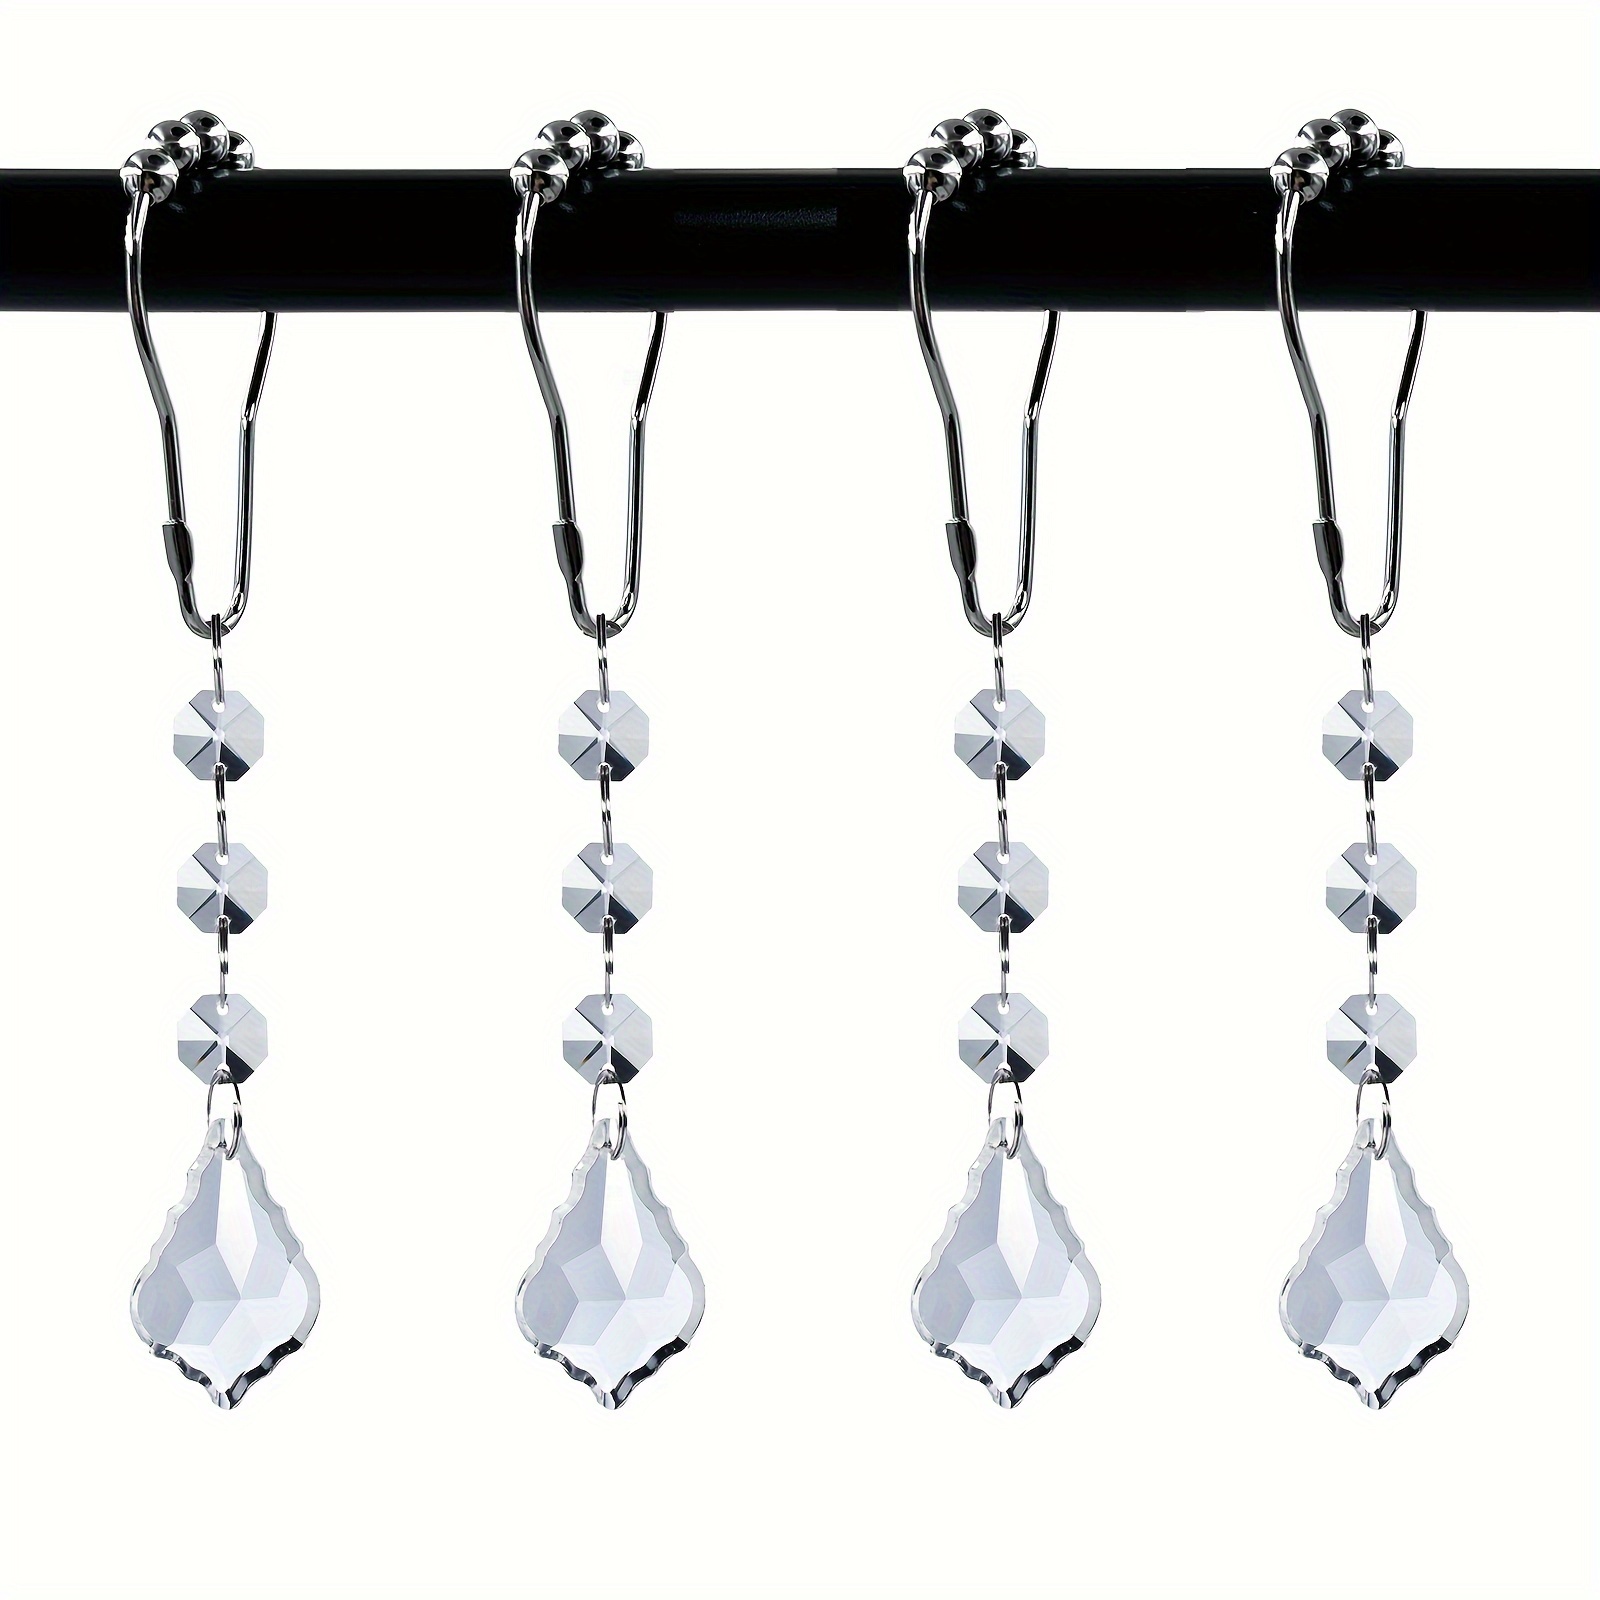 12pcs Crystal Drop Shower Curtain Hook, Decorative Shower Curtain Hooks,  Rust-proof Hooks For Shower Curtains, Bathroom Decoration Accessories